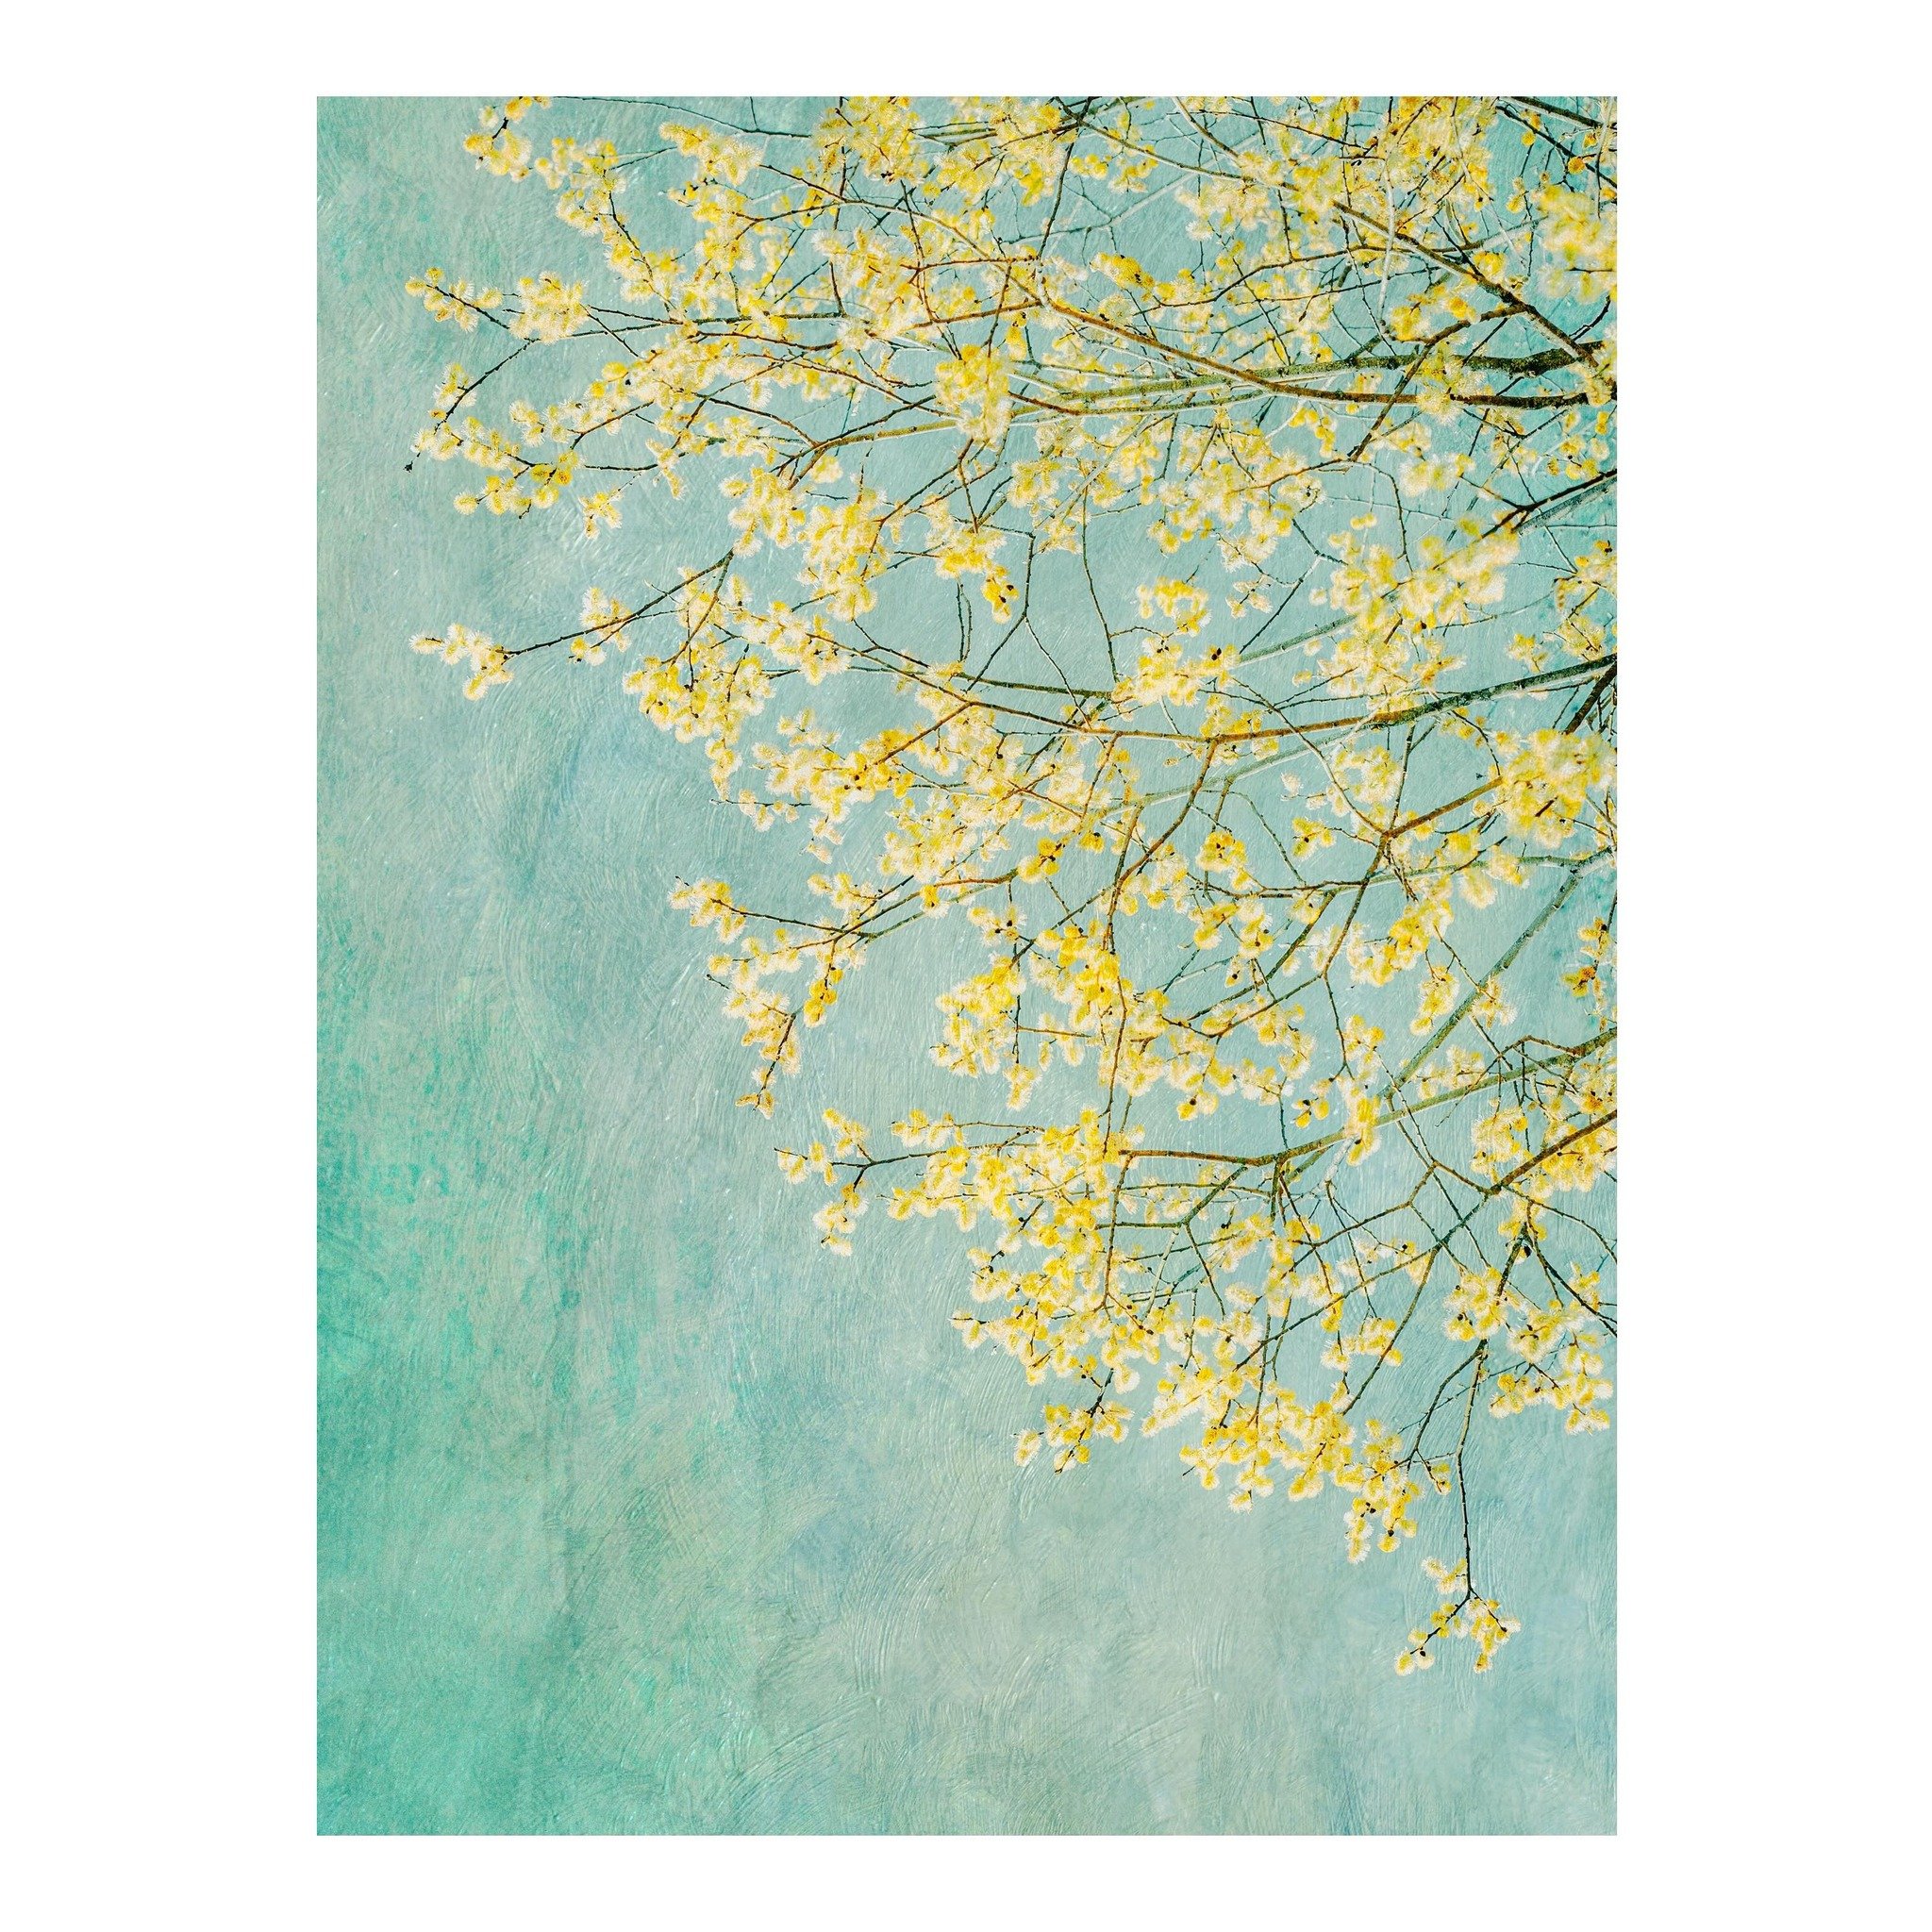 Spring Ii
.
.
.
.
. 
#tree #spring #impressionism #zennature #blossom #elementsphotomag #landscapephotography #trees #woodlandphotography #landscapephotography  #minimalmood #minimalism #abstractart #naturephotography #fineartphotography #artclassifi